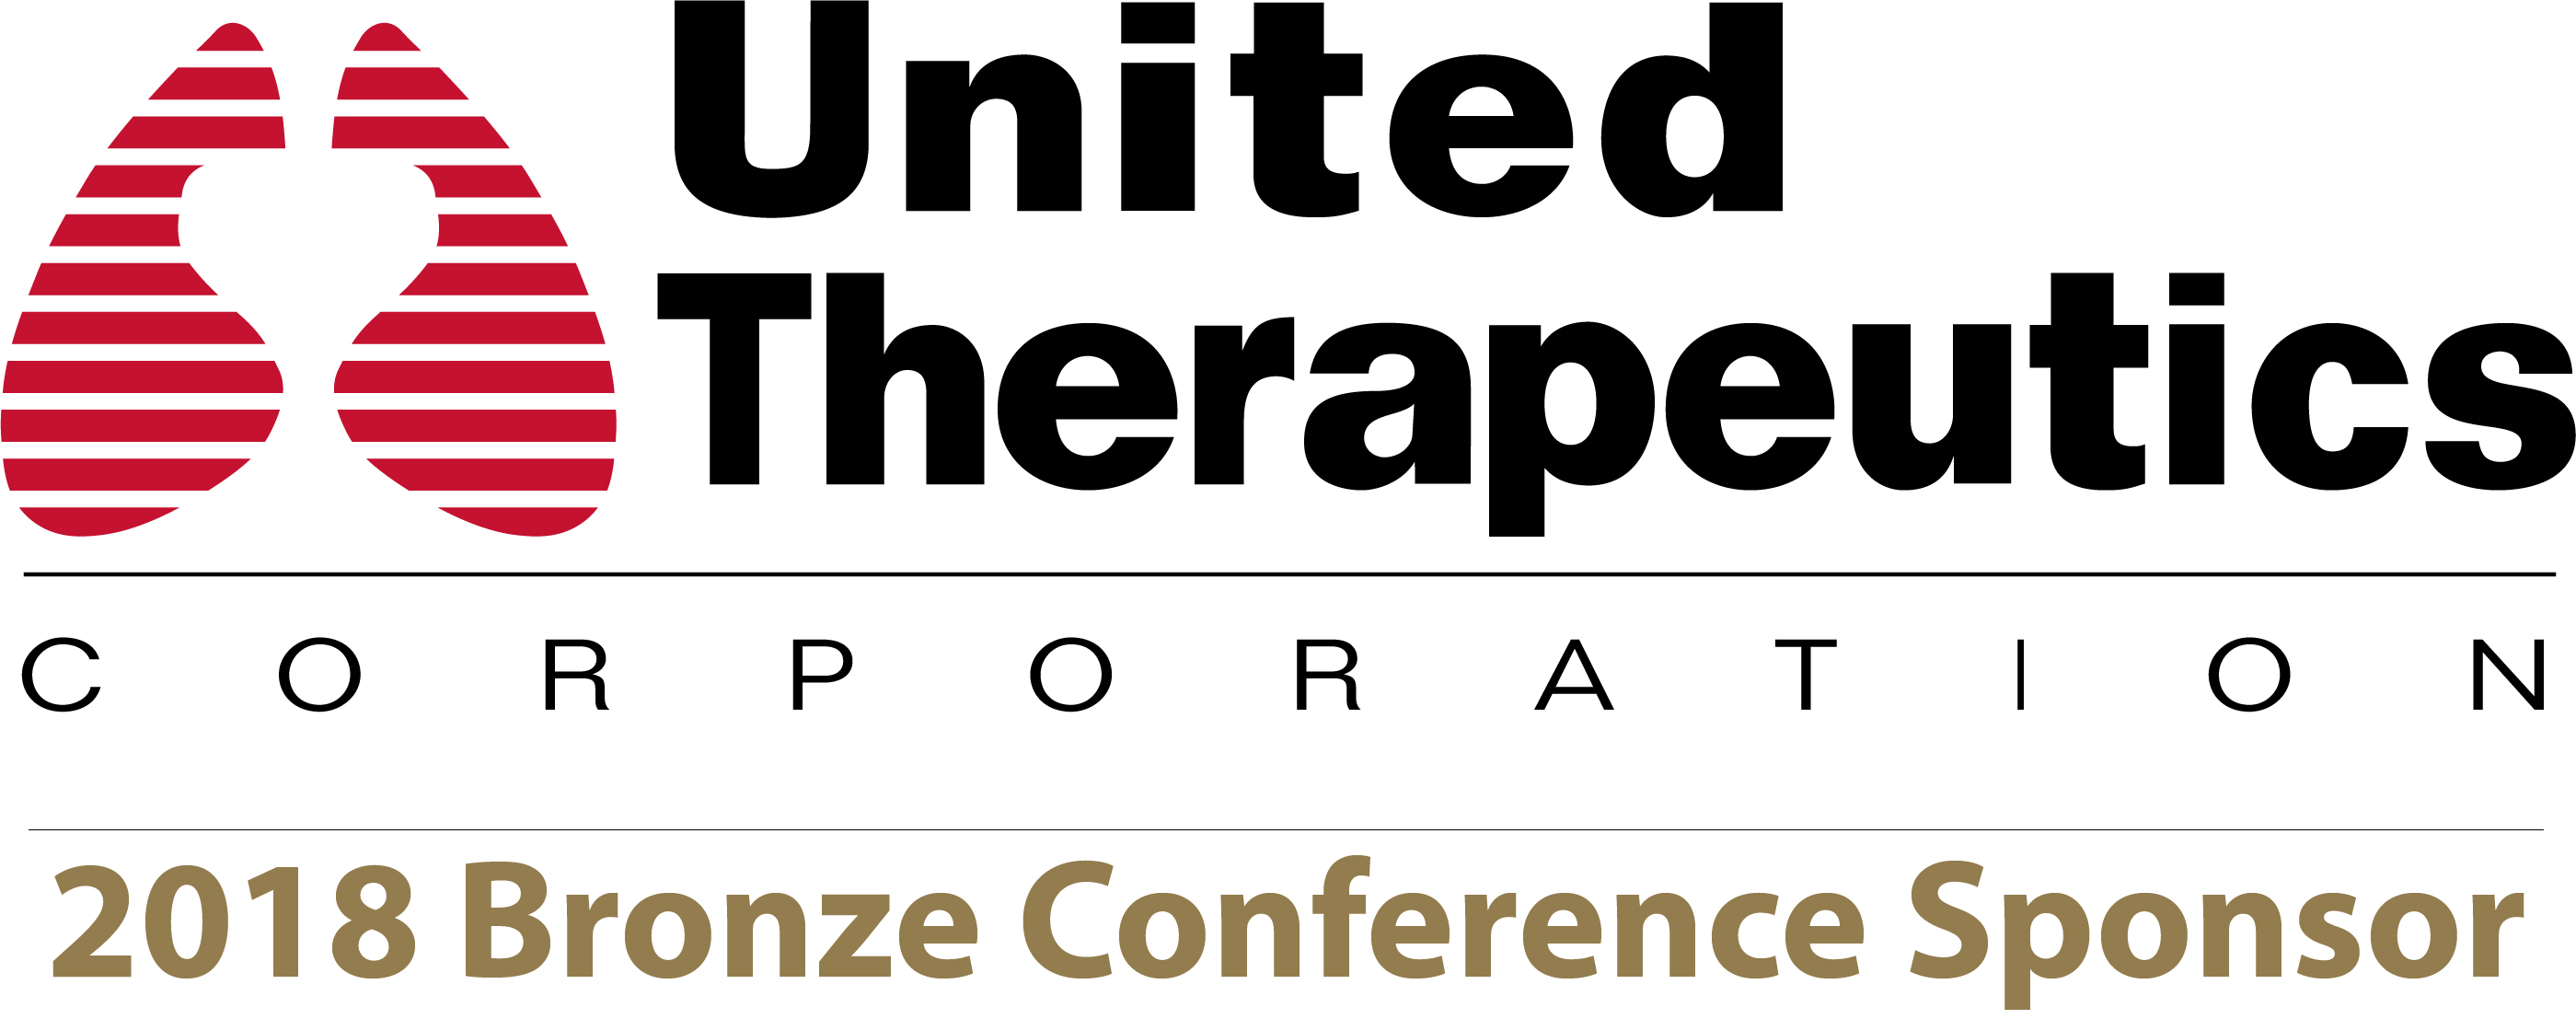 United Therapeutics 2018 Bronze Conference Sponsor